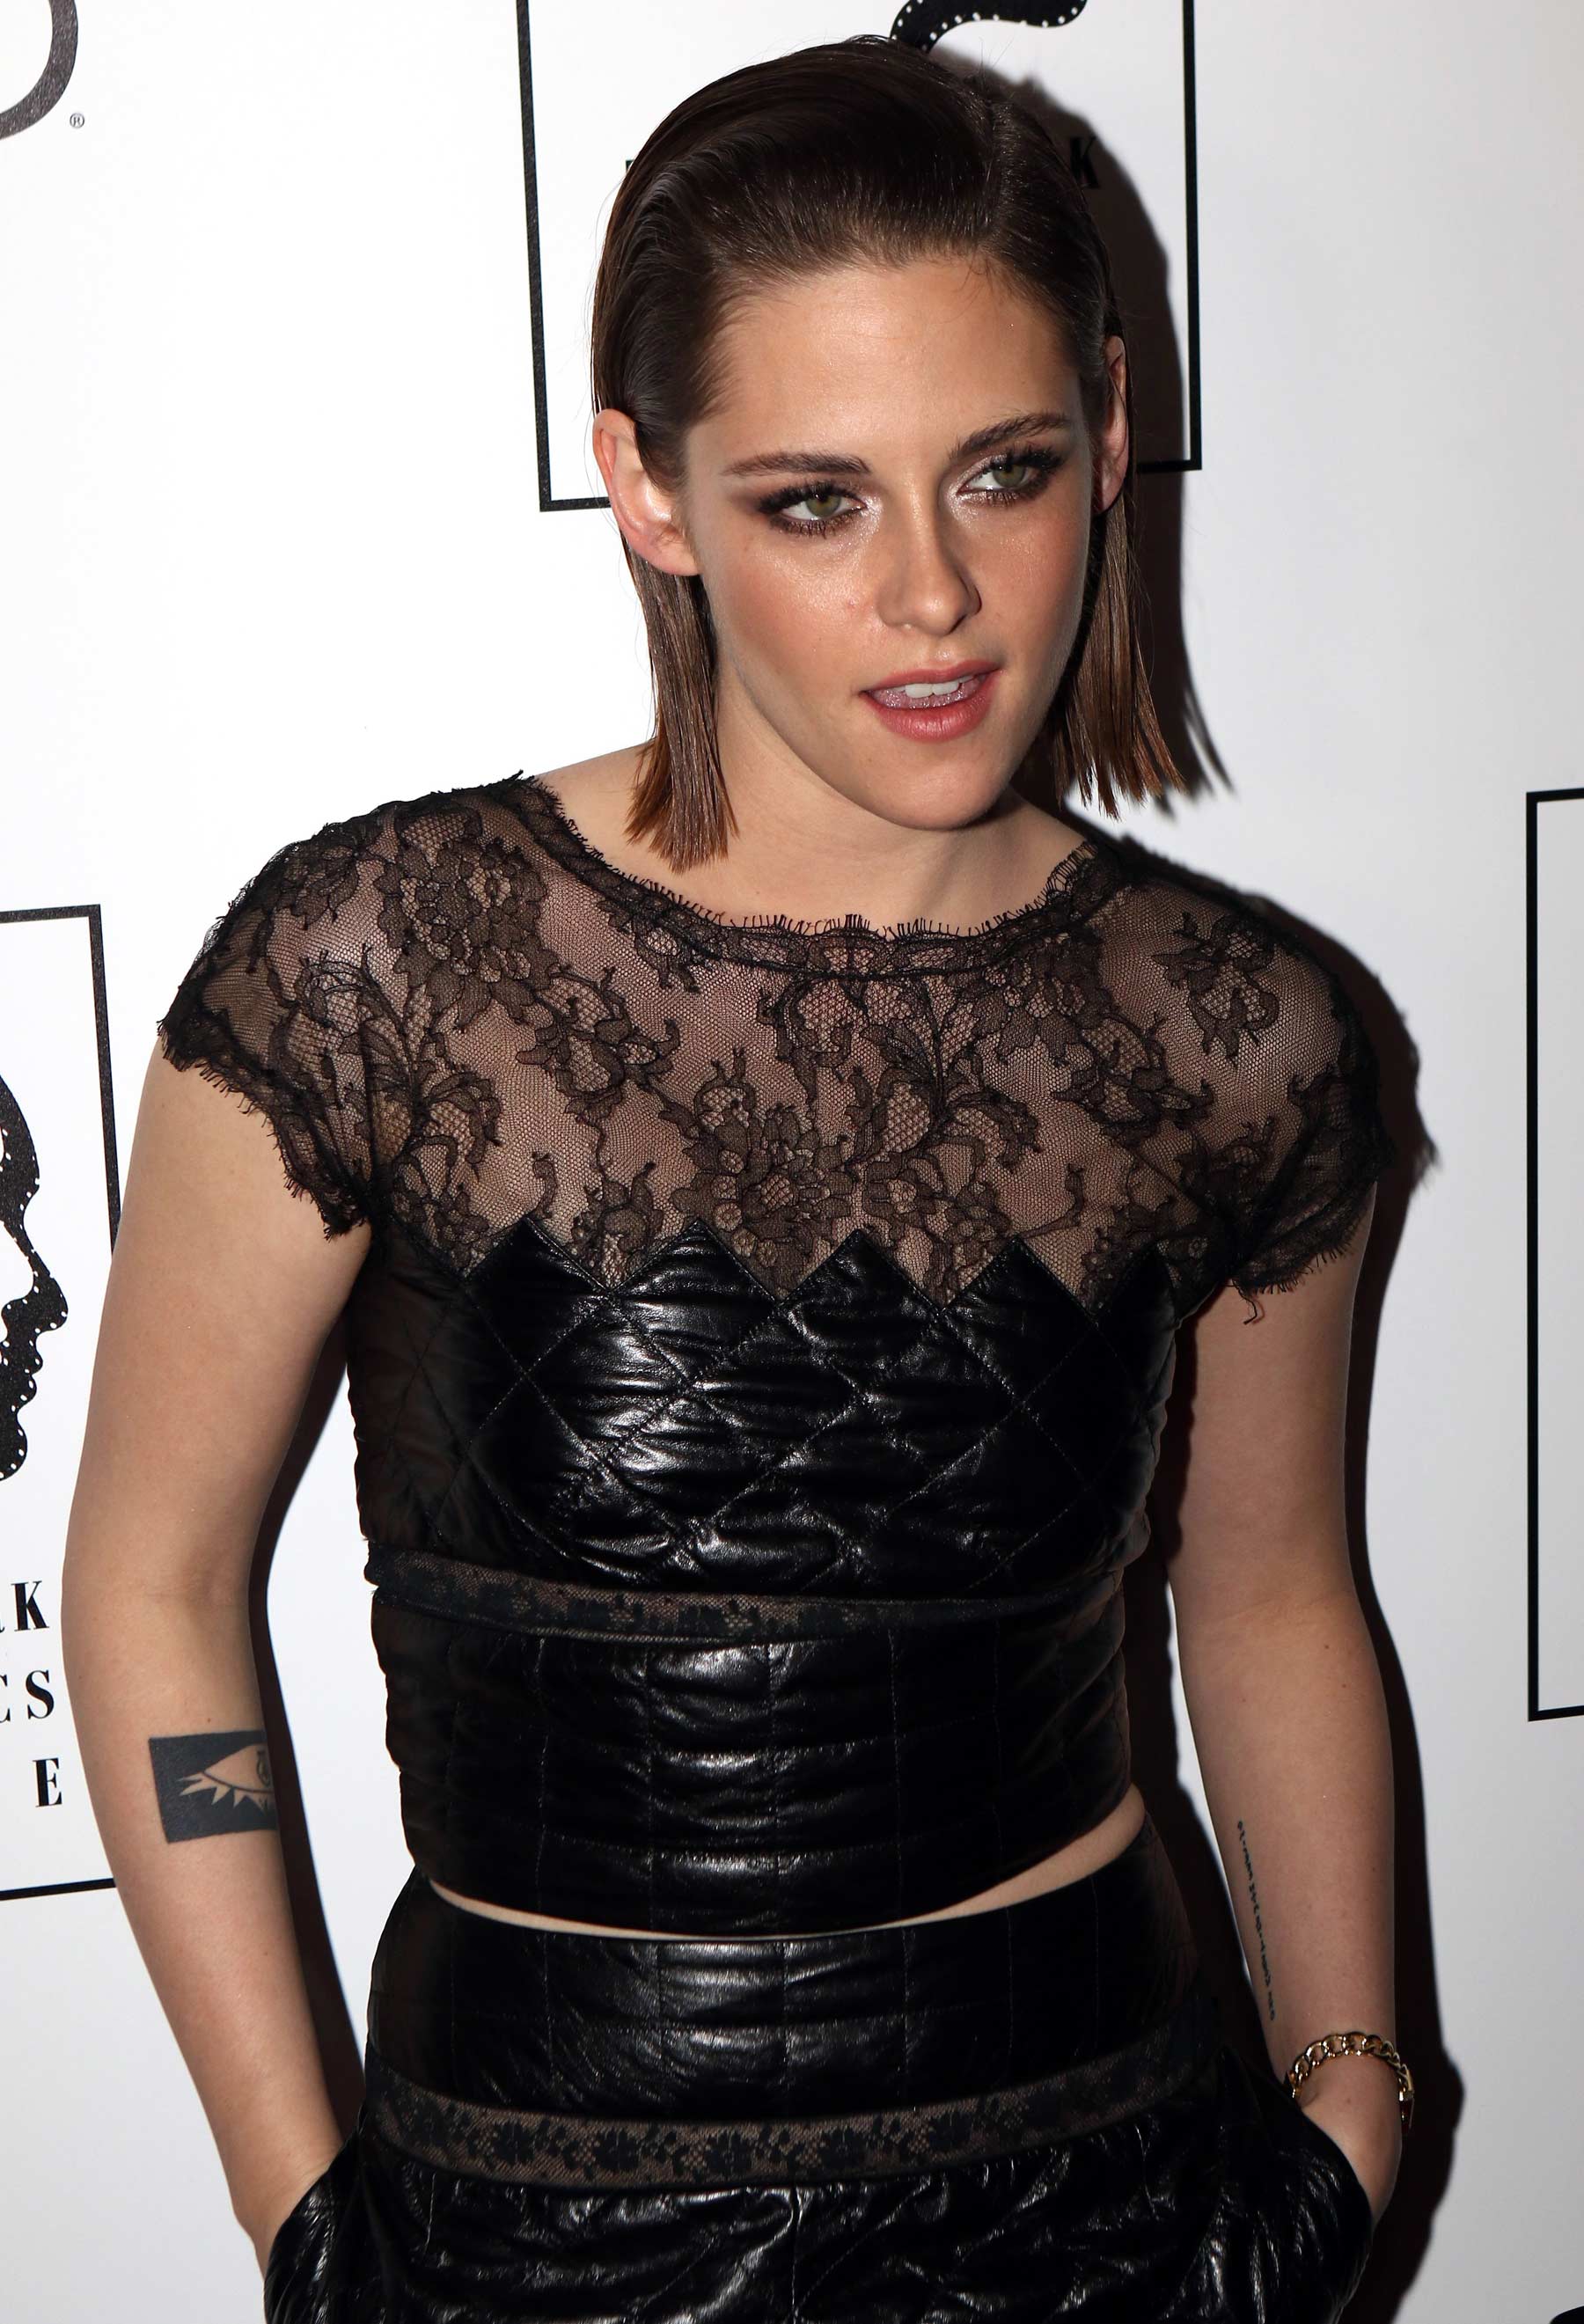 Kristen Stewart attends 2015 New York Film Critics Circle Awards